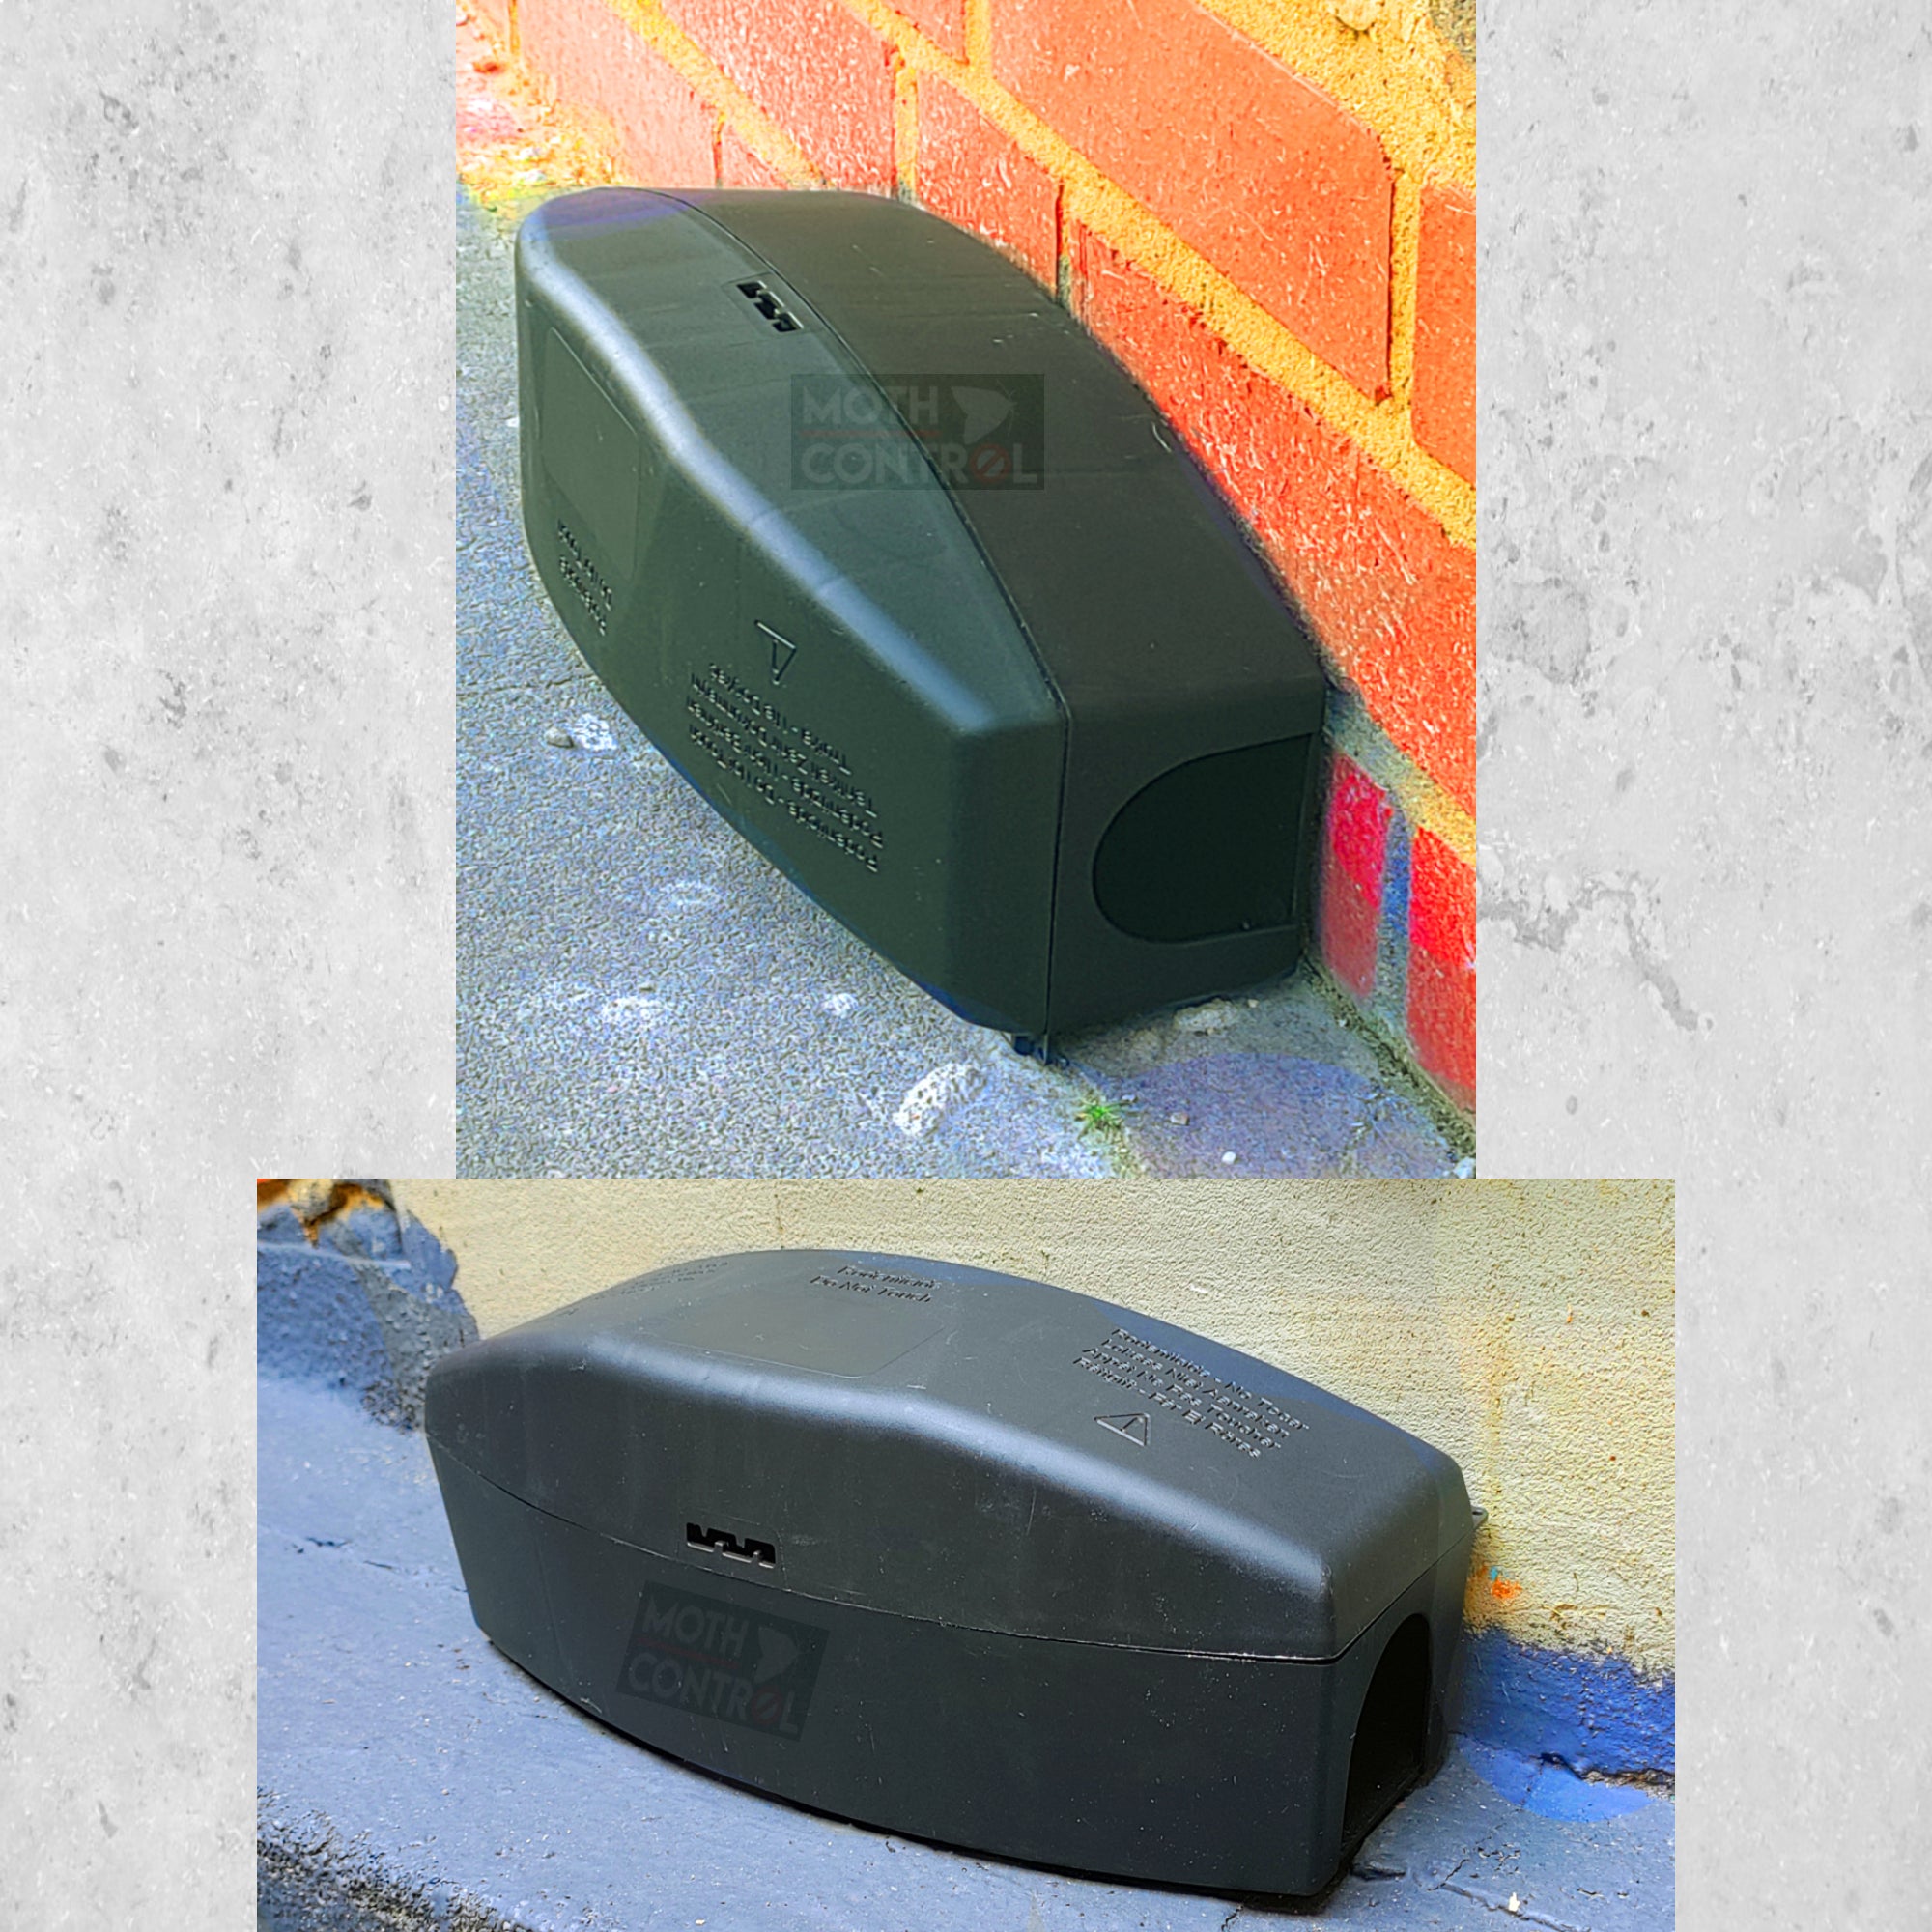 Rodent Rat/Mice/Mouse Bait/Trap Box Boxes No Poison CHILD/PET PROOF - Compact & Unobtrusive Rodent Bait Box (Pack of 2) - Moth Control